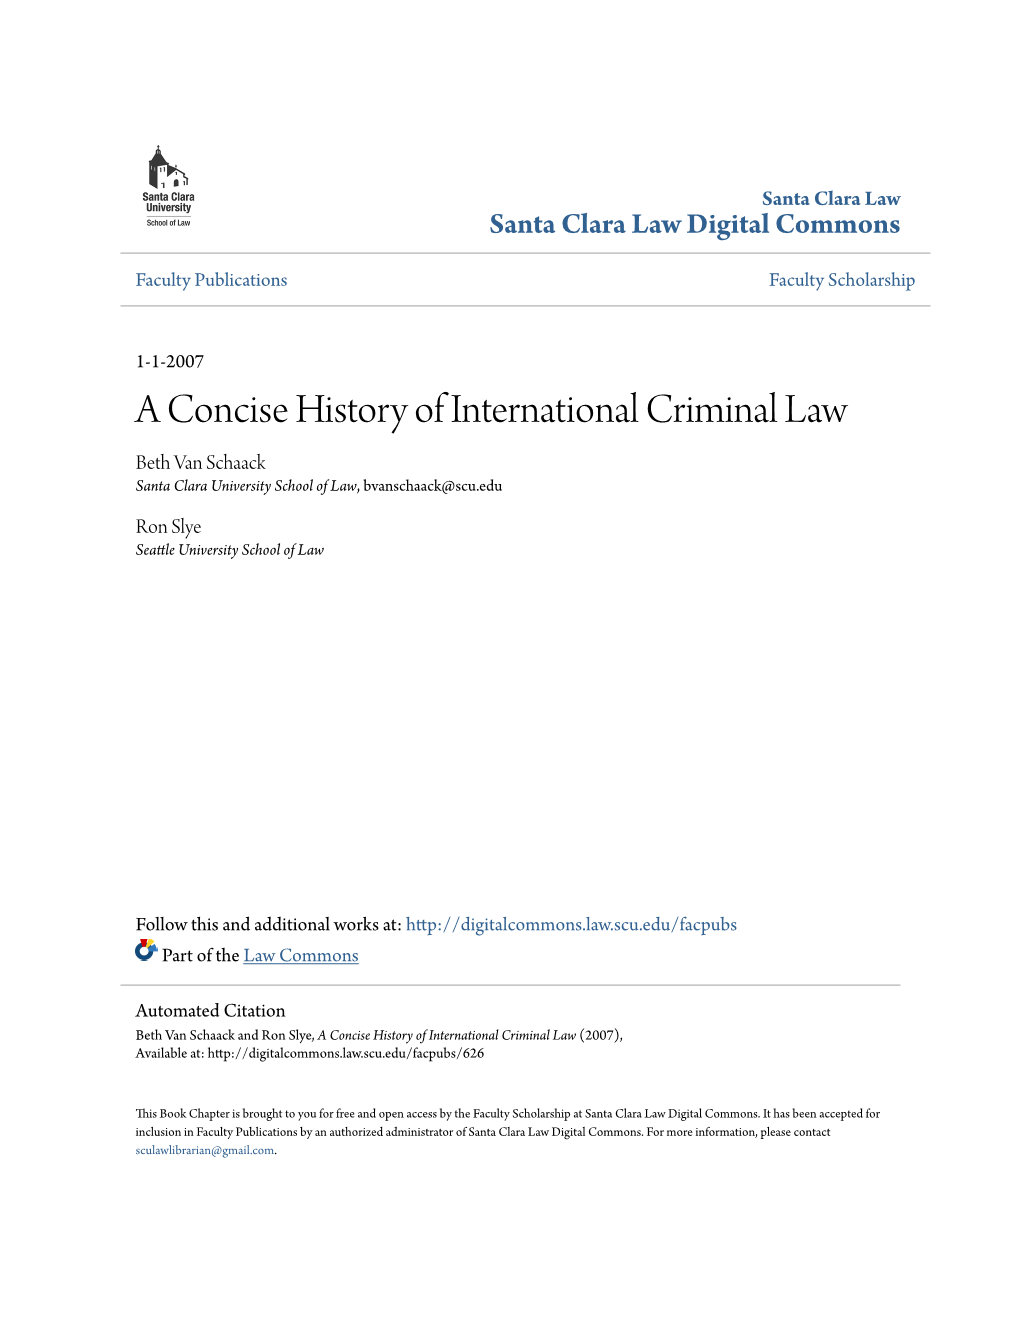 A Concise History of International Criminal Law Beth Van Schaack Santa Clara University School of Law, Bvanschaack@Scu.Edu